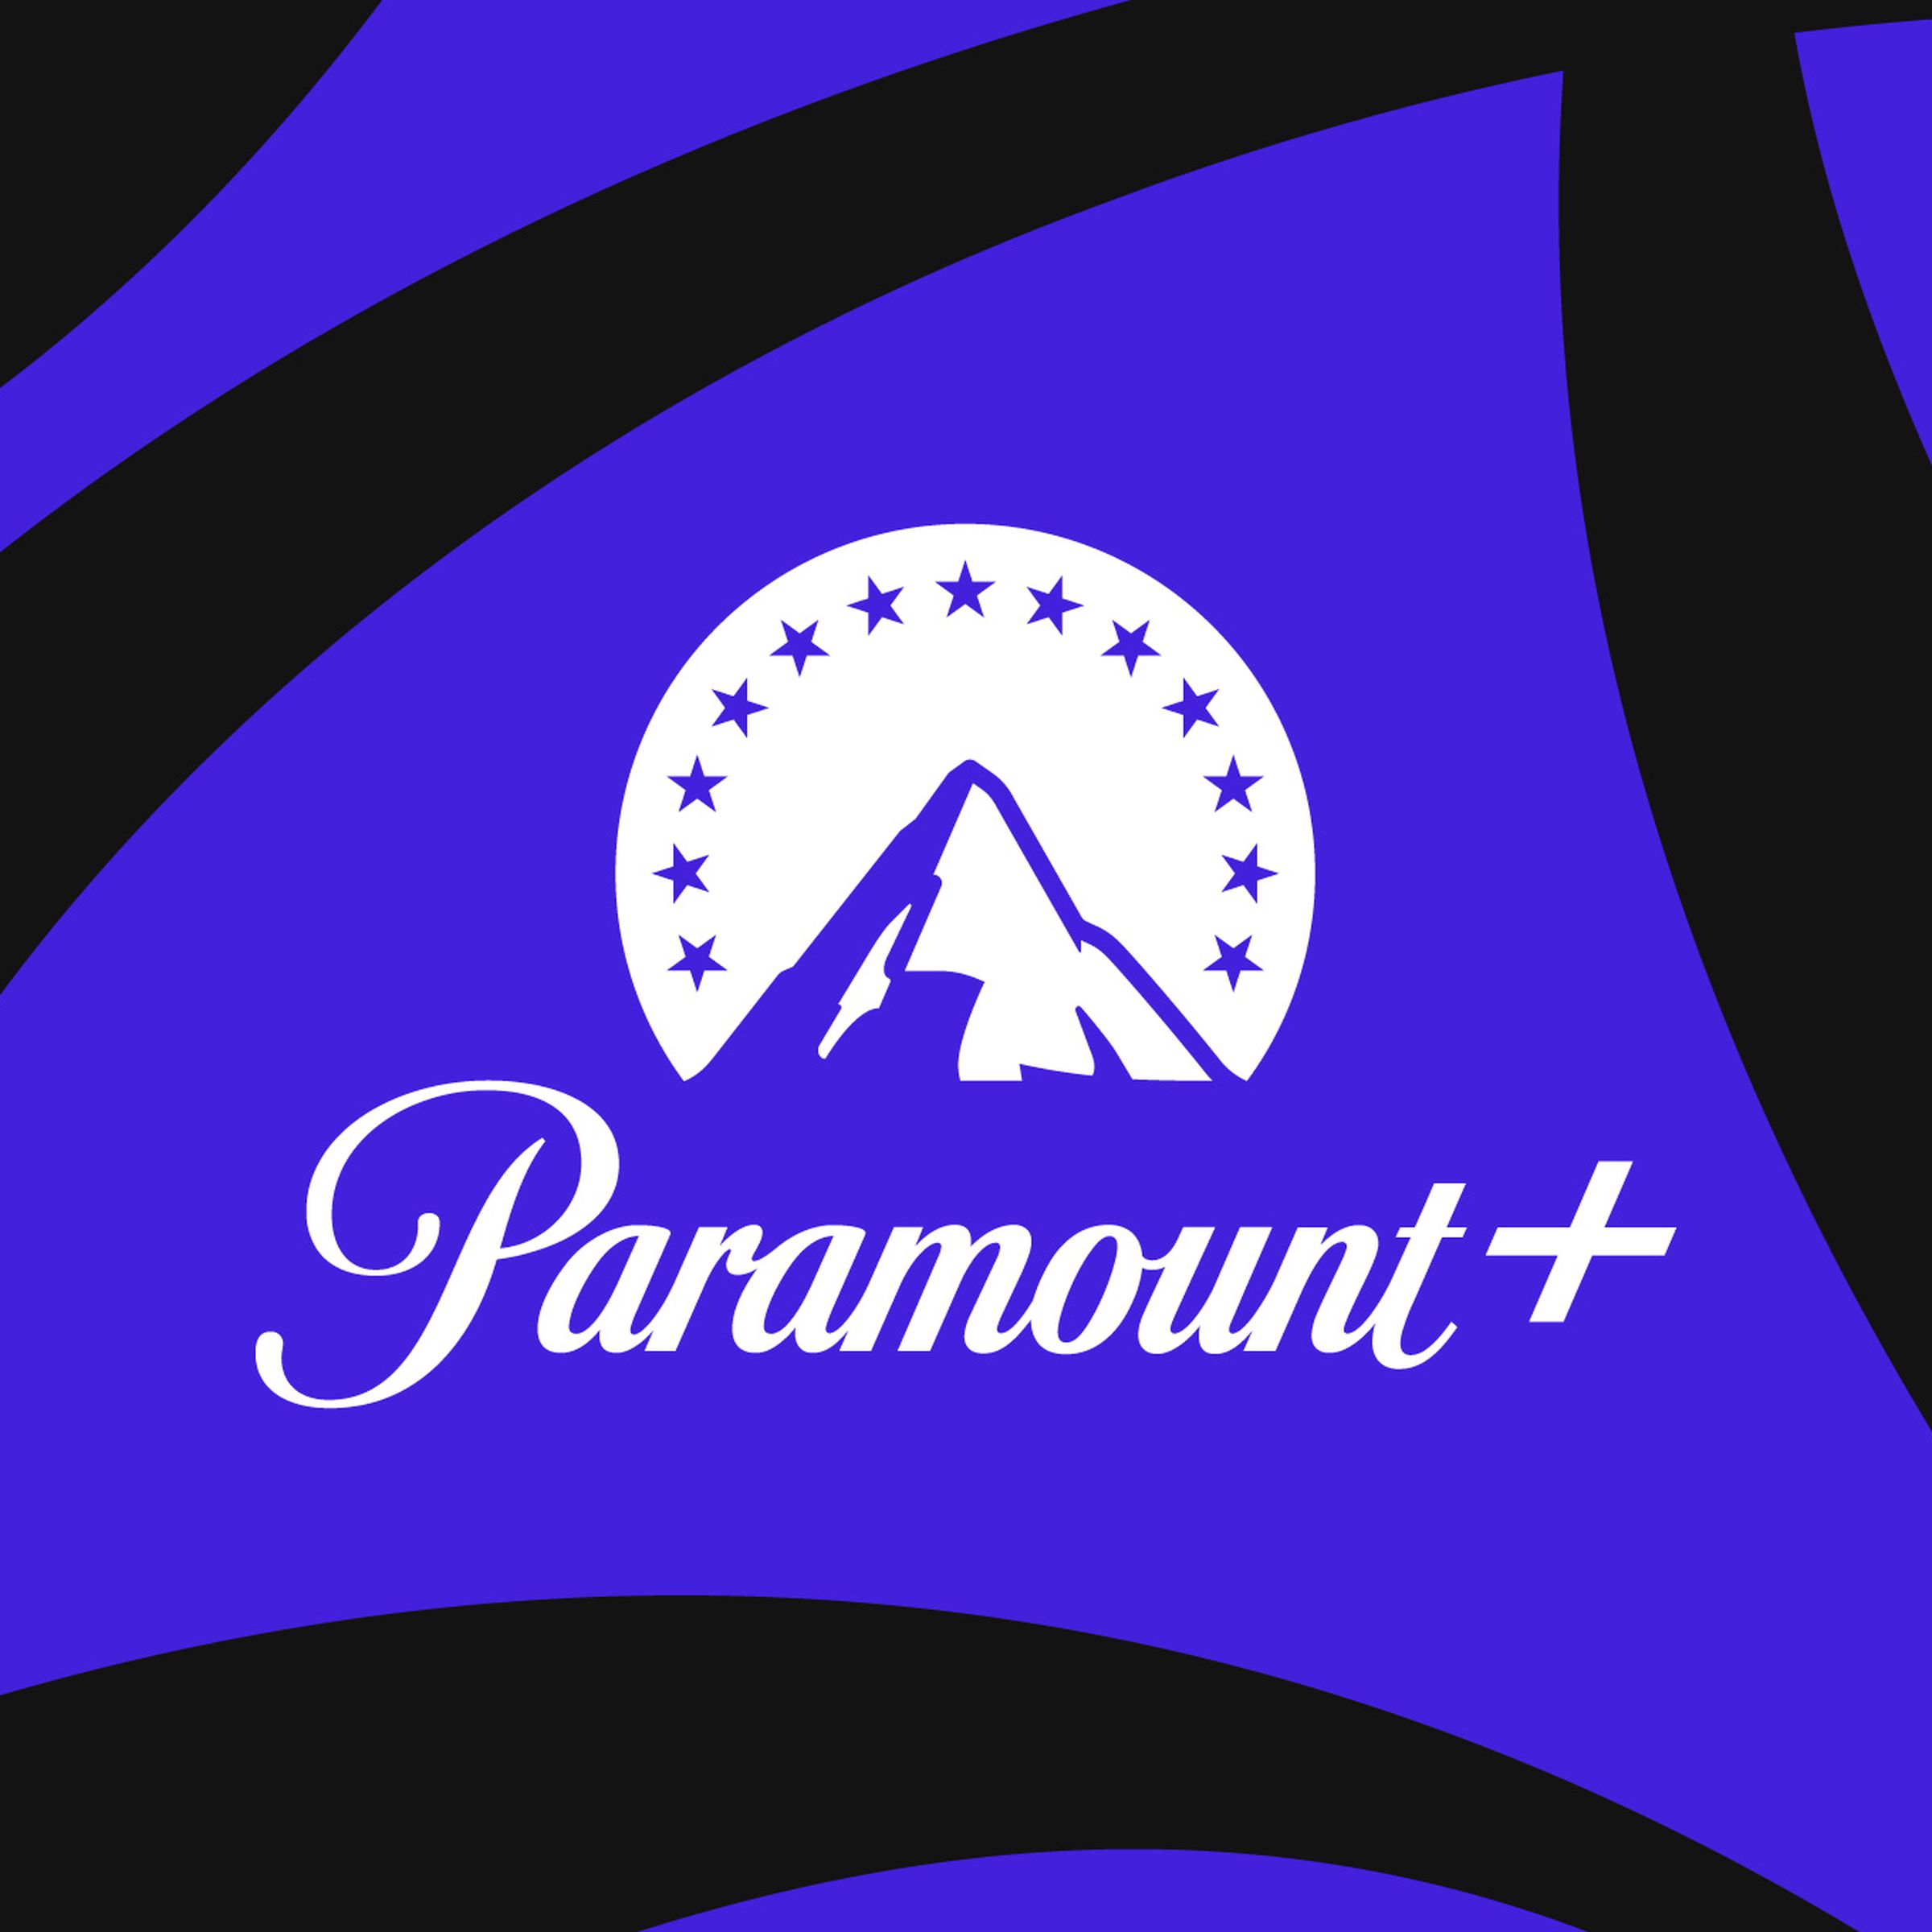 Paramount Plus logo on blue and black background